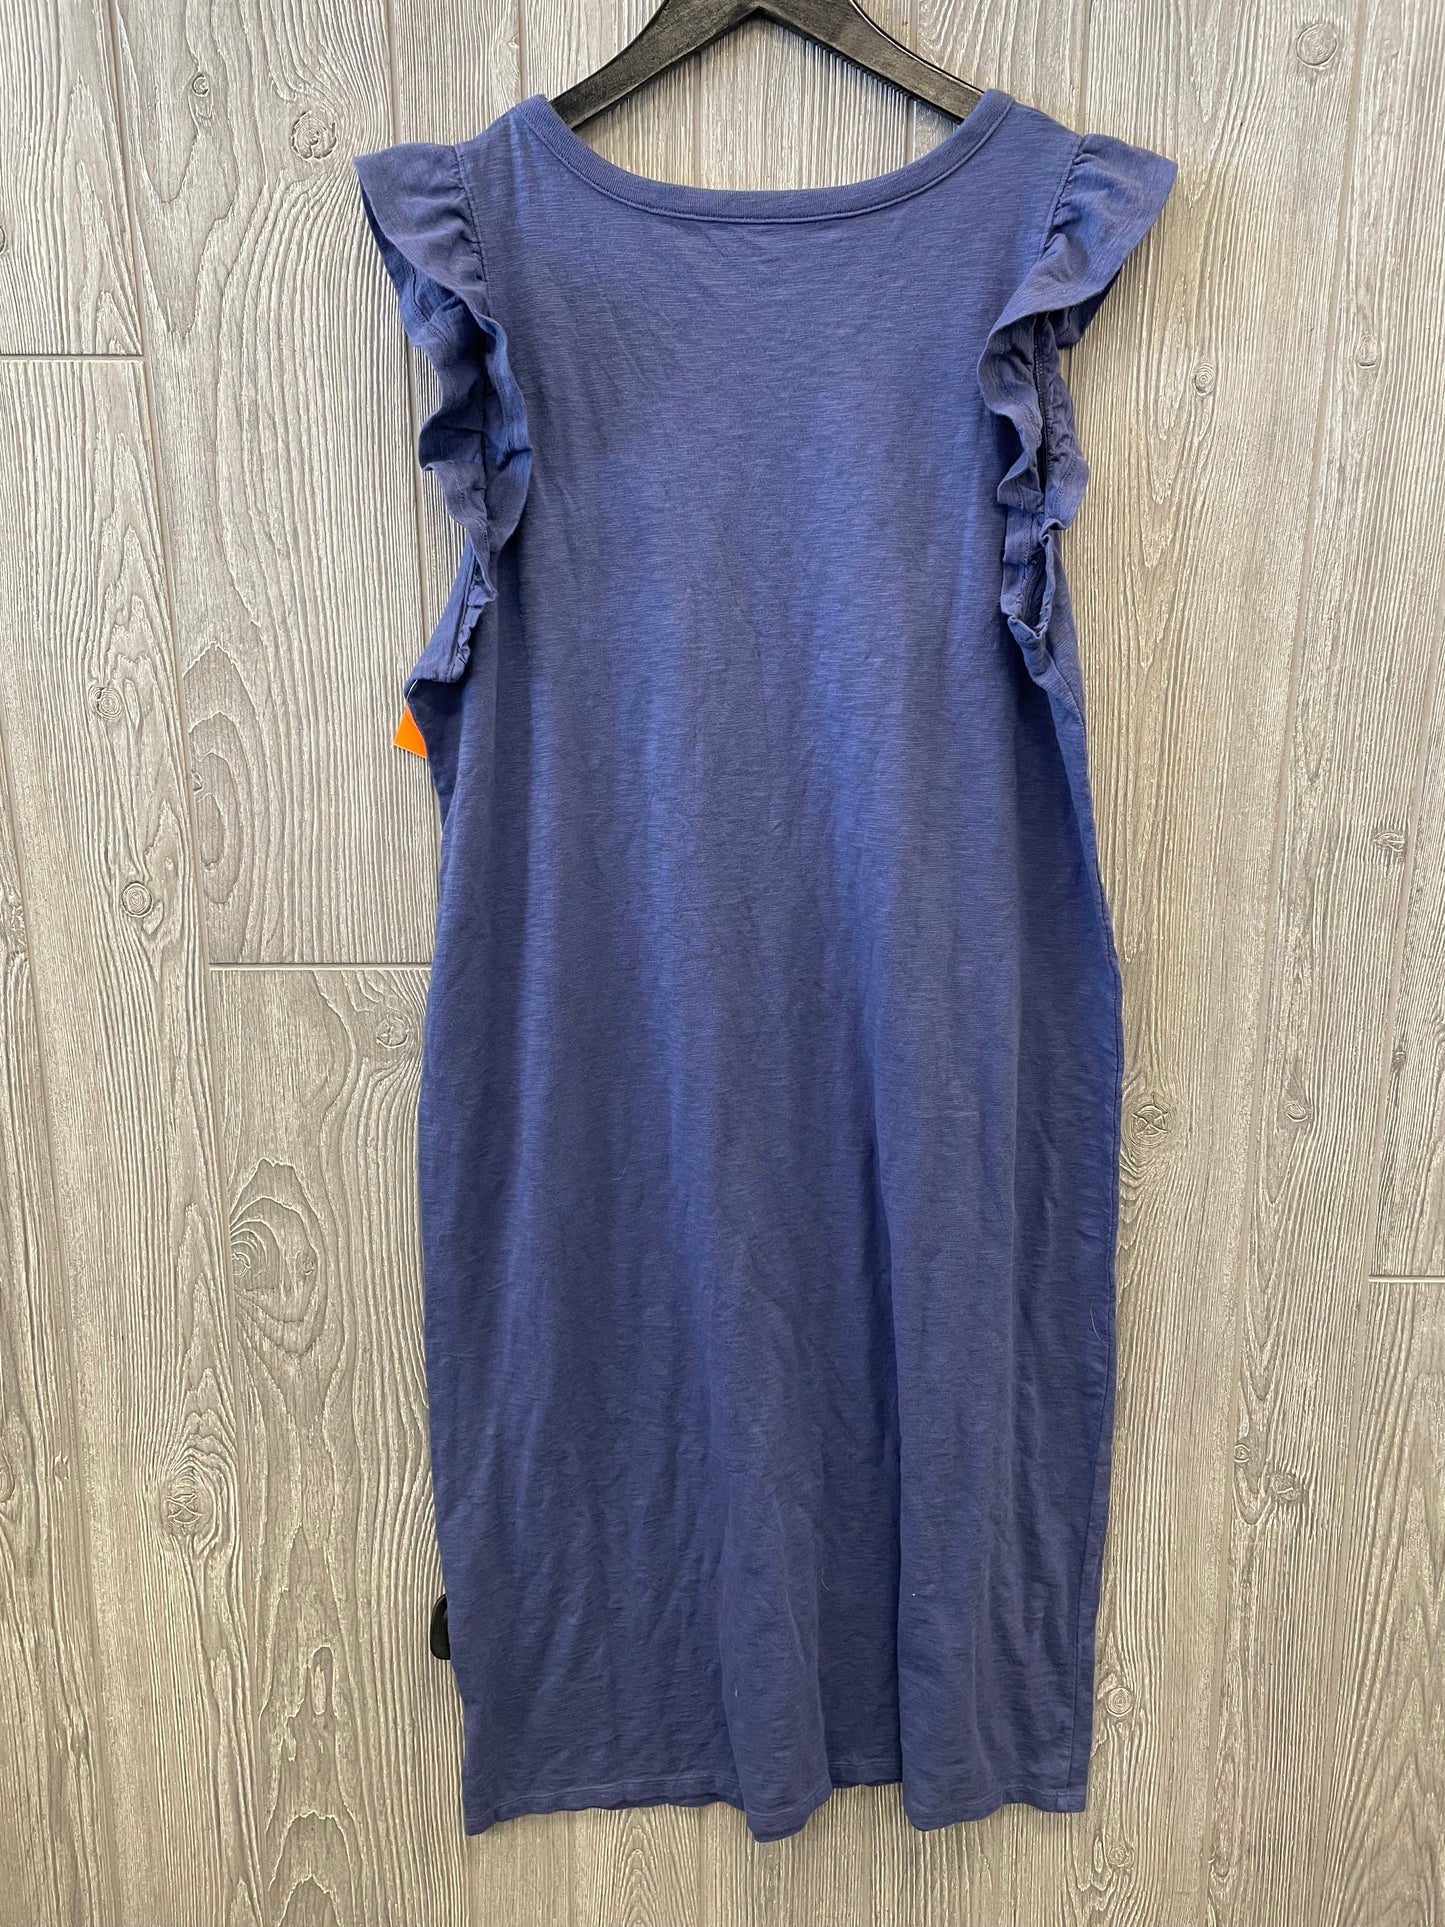 Dress Casual Midi By Universal Thread  Size: Xxl